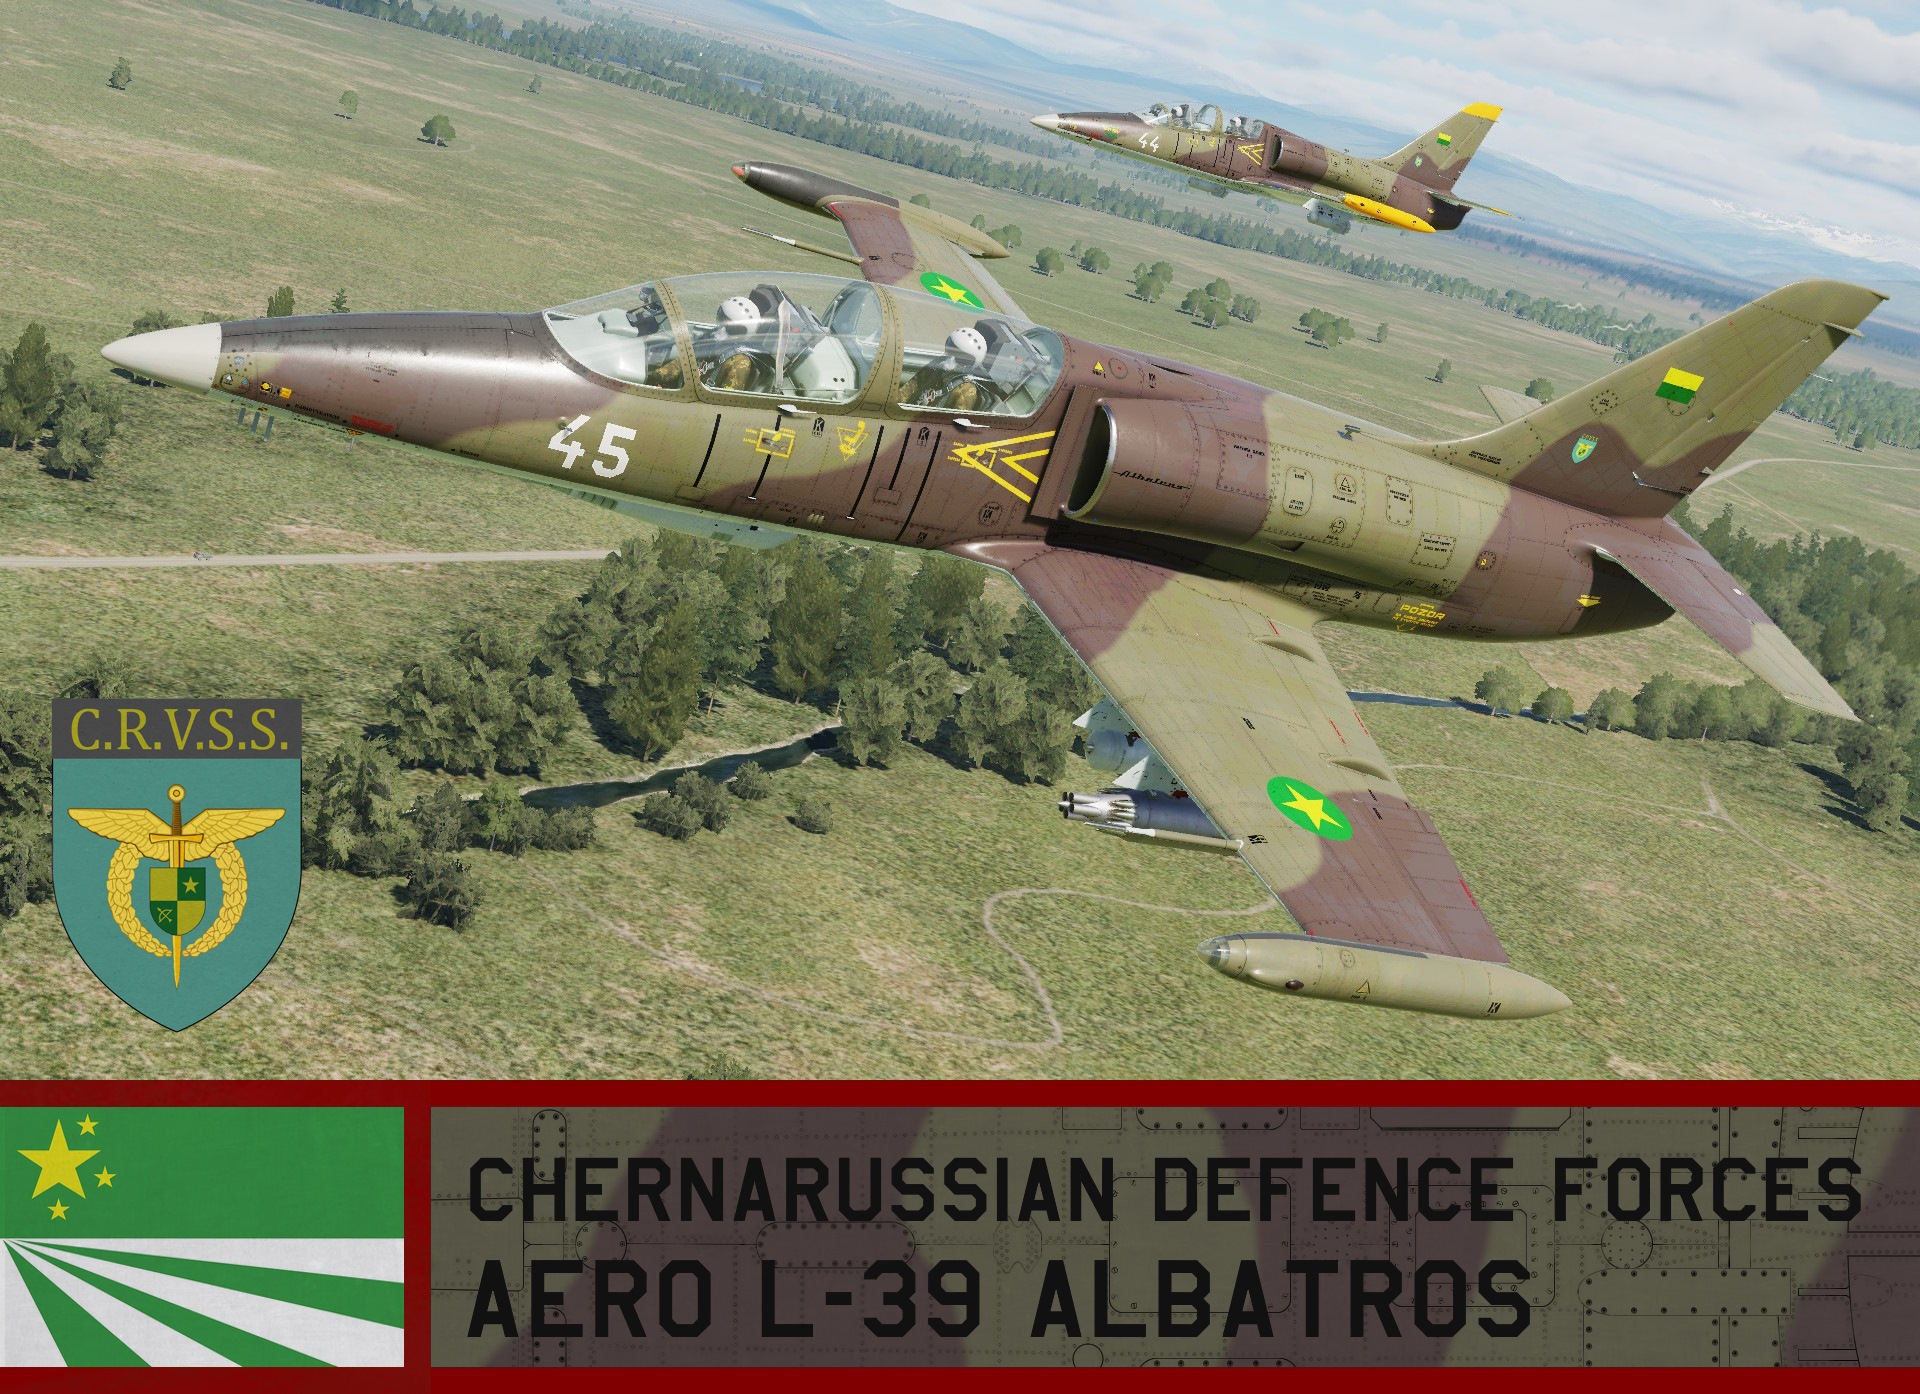 Chernarussian Air Defence Forces L-39 Albatros - ArmA II *UPDATED*